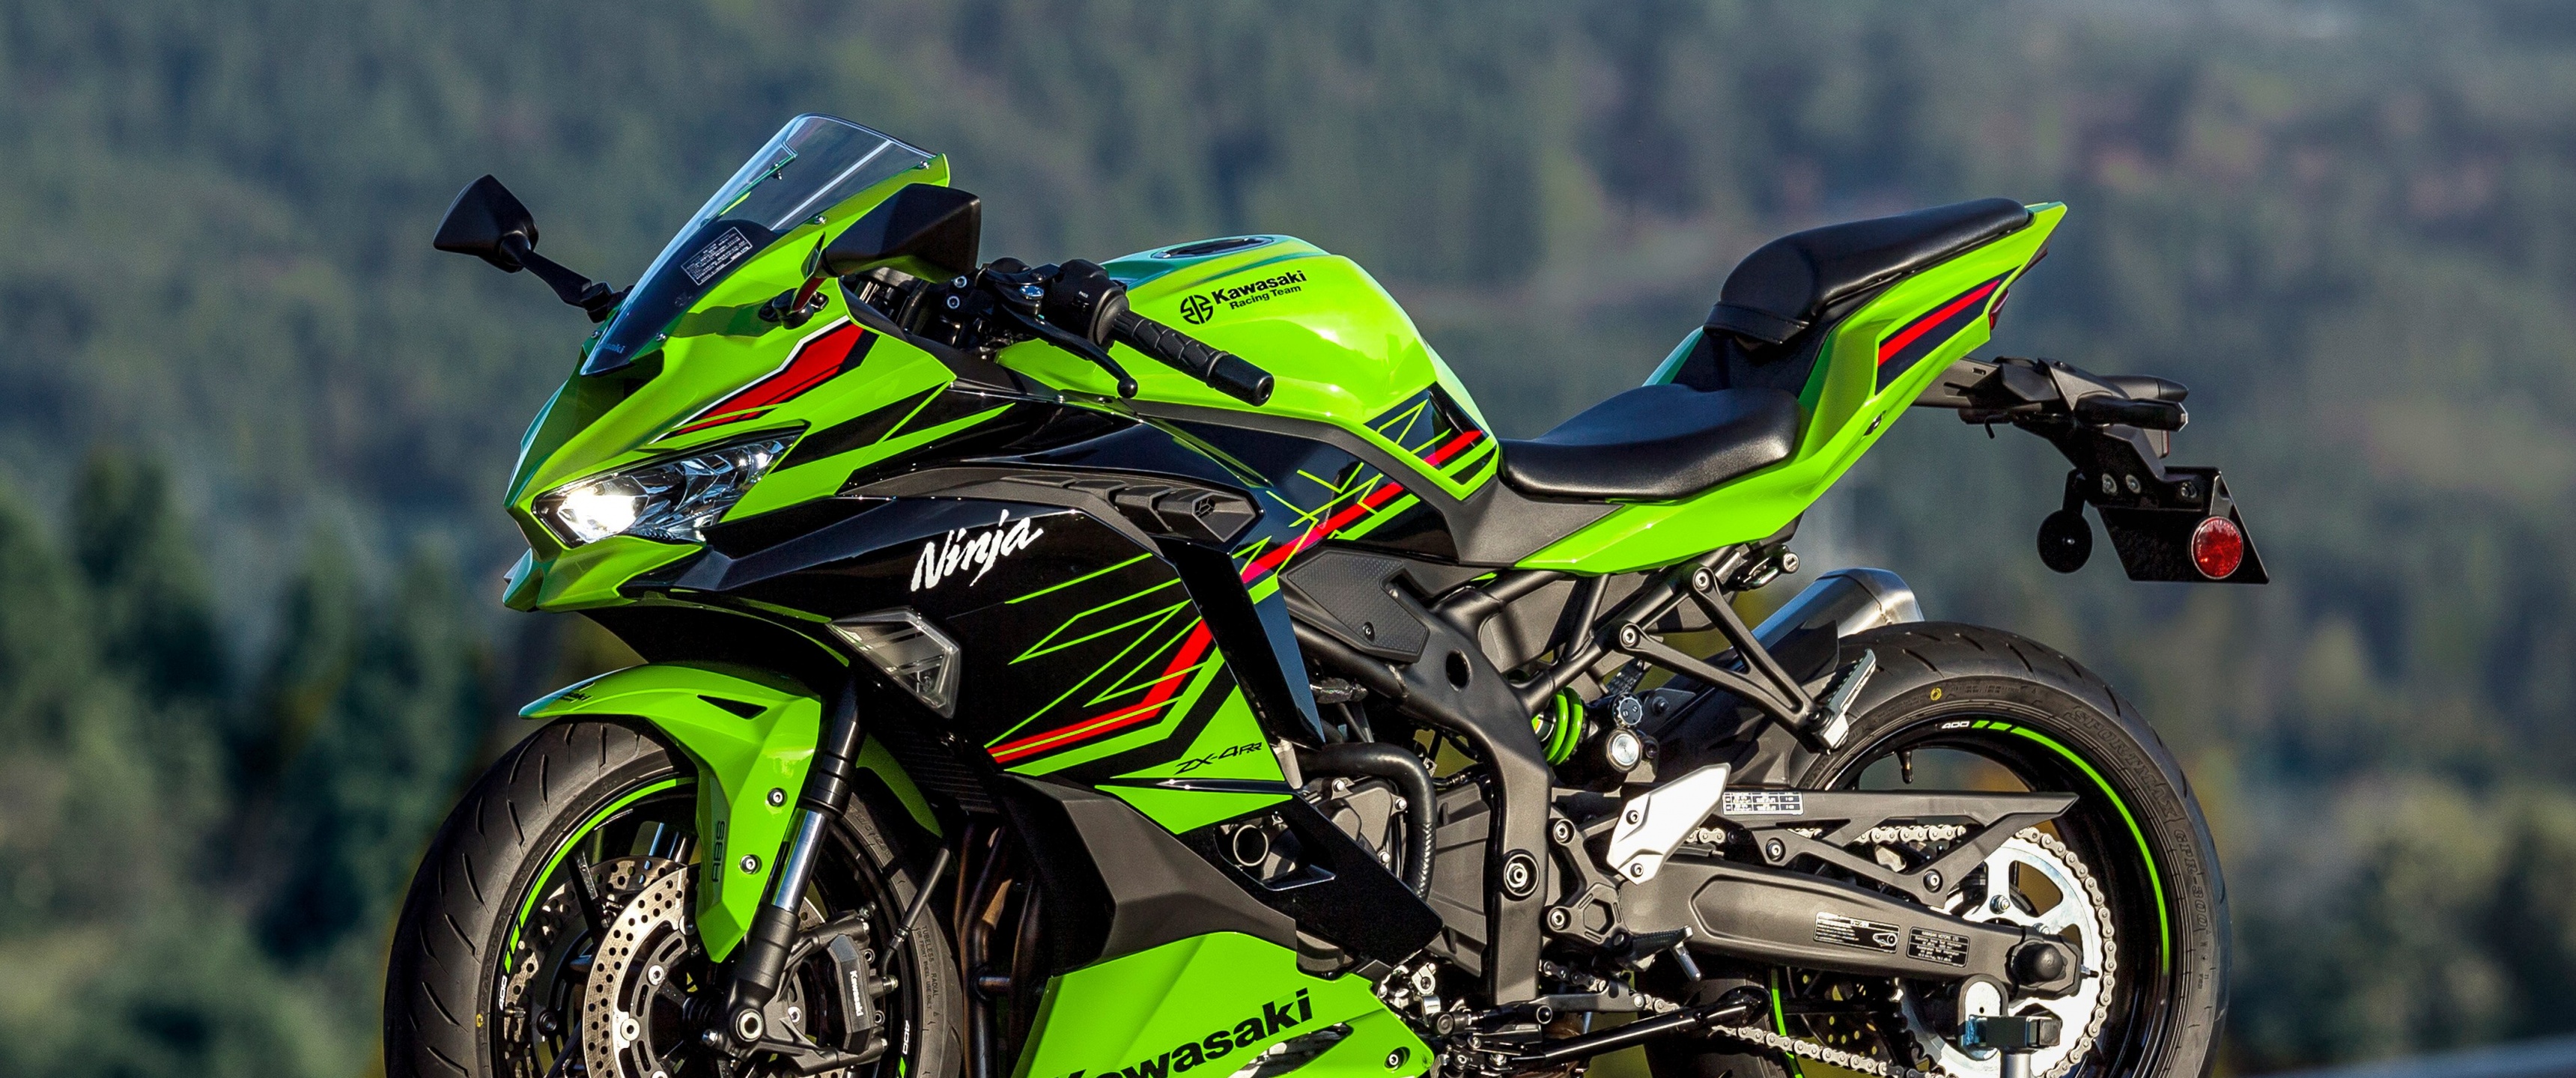 Kawasaki Ninja H2R Wallpapers APK for Android Download